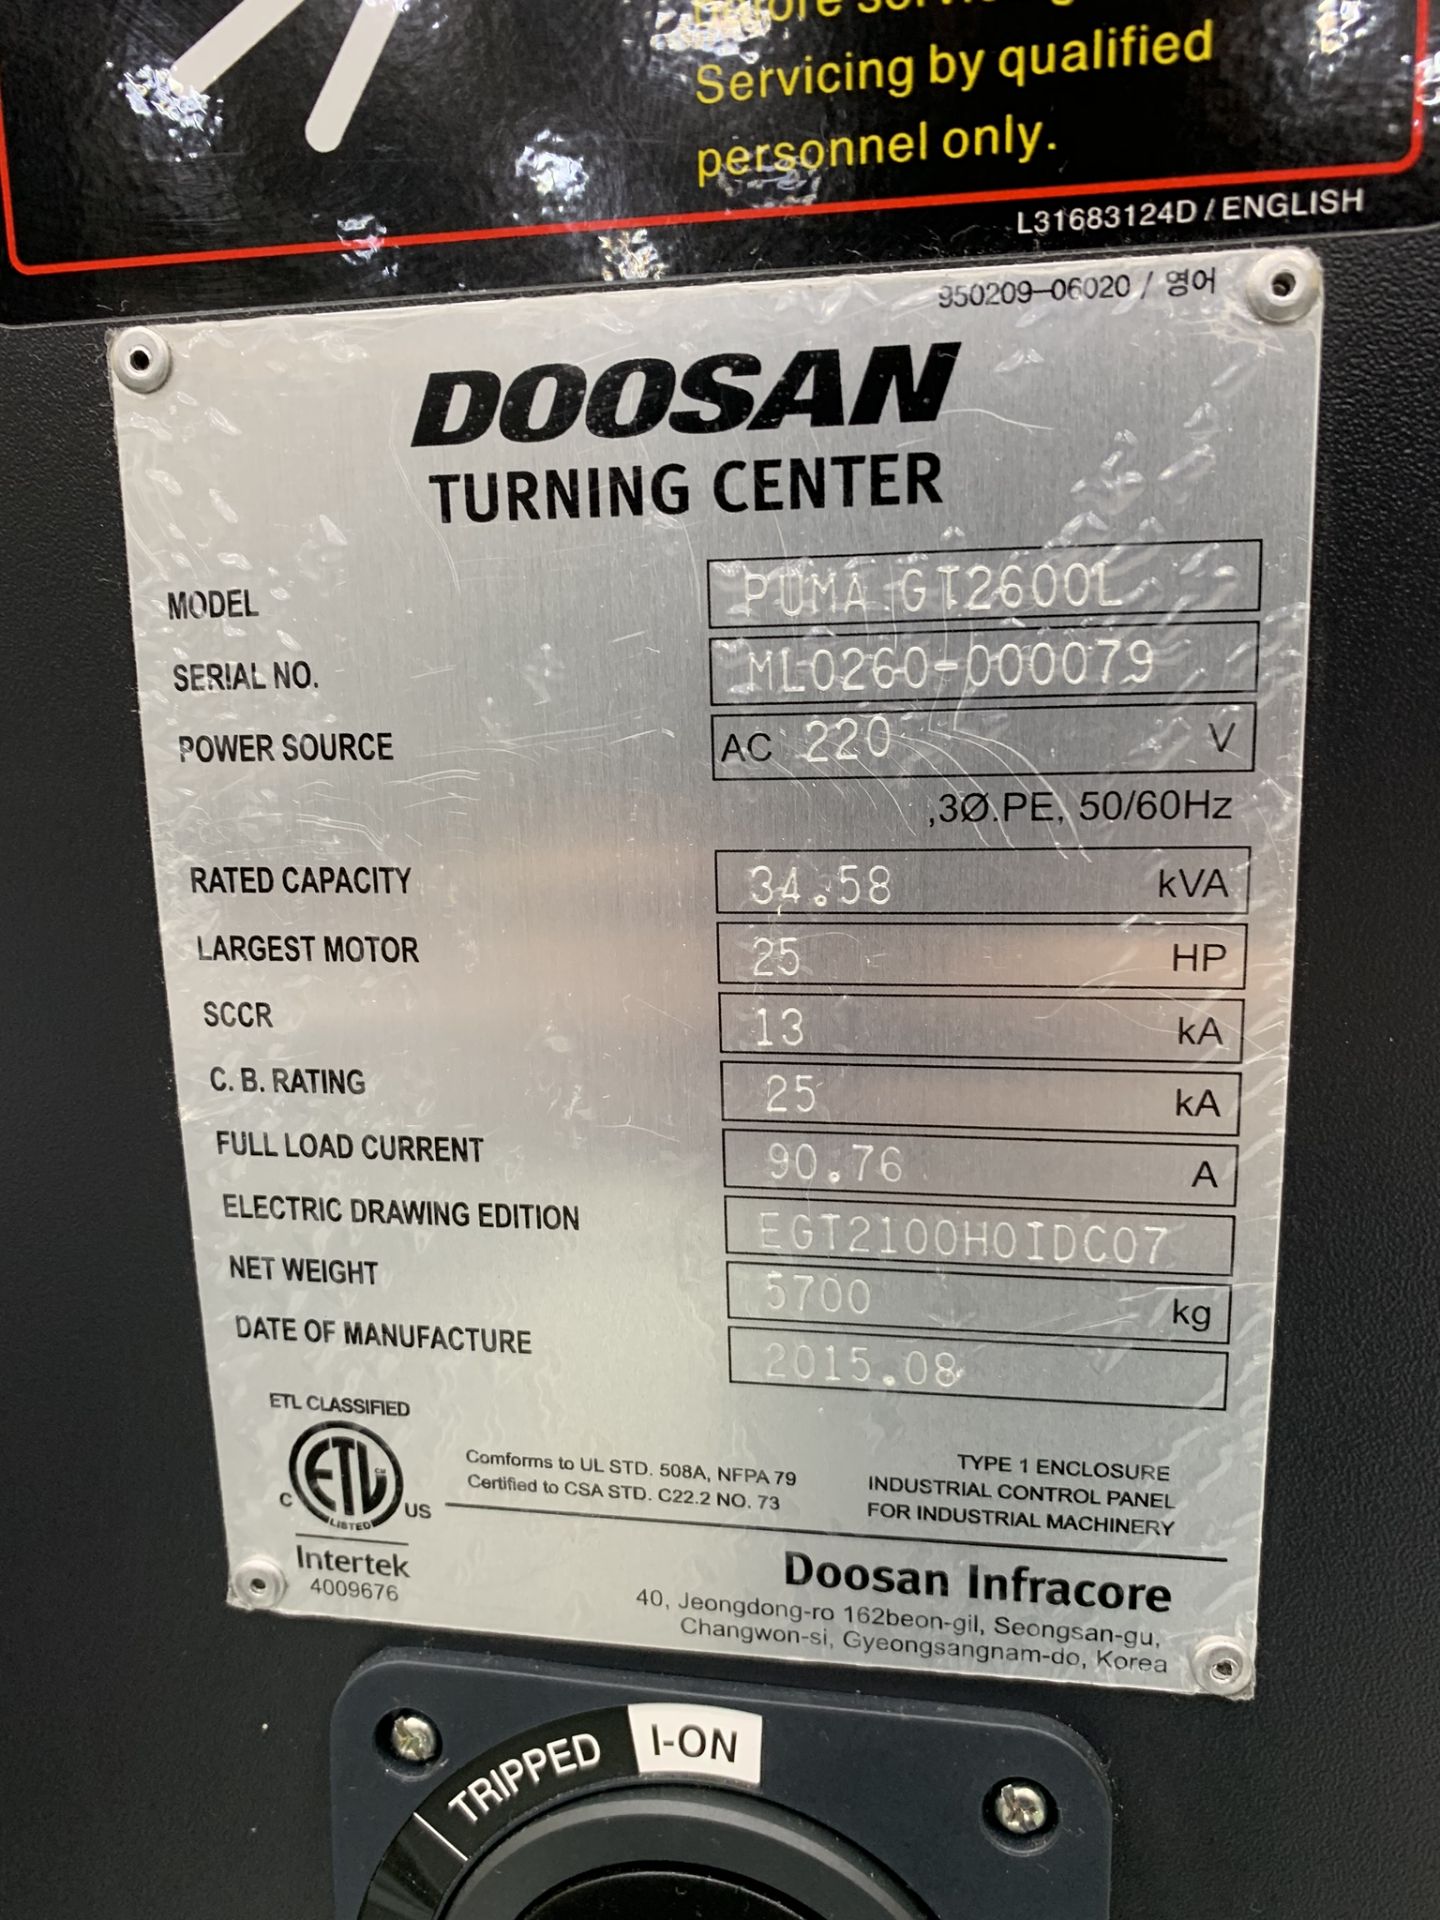 DOOSAN Puma GT2600L 2-Axis CNC Turning Center (2015) - Image 13 of 15